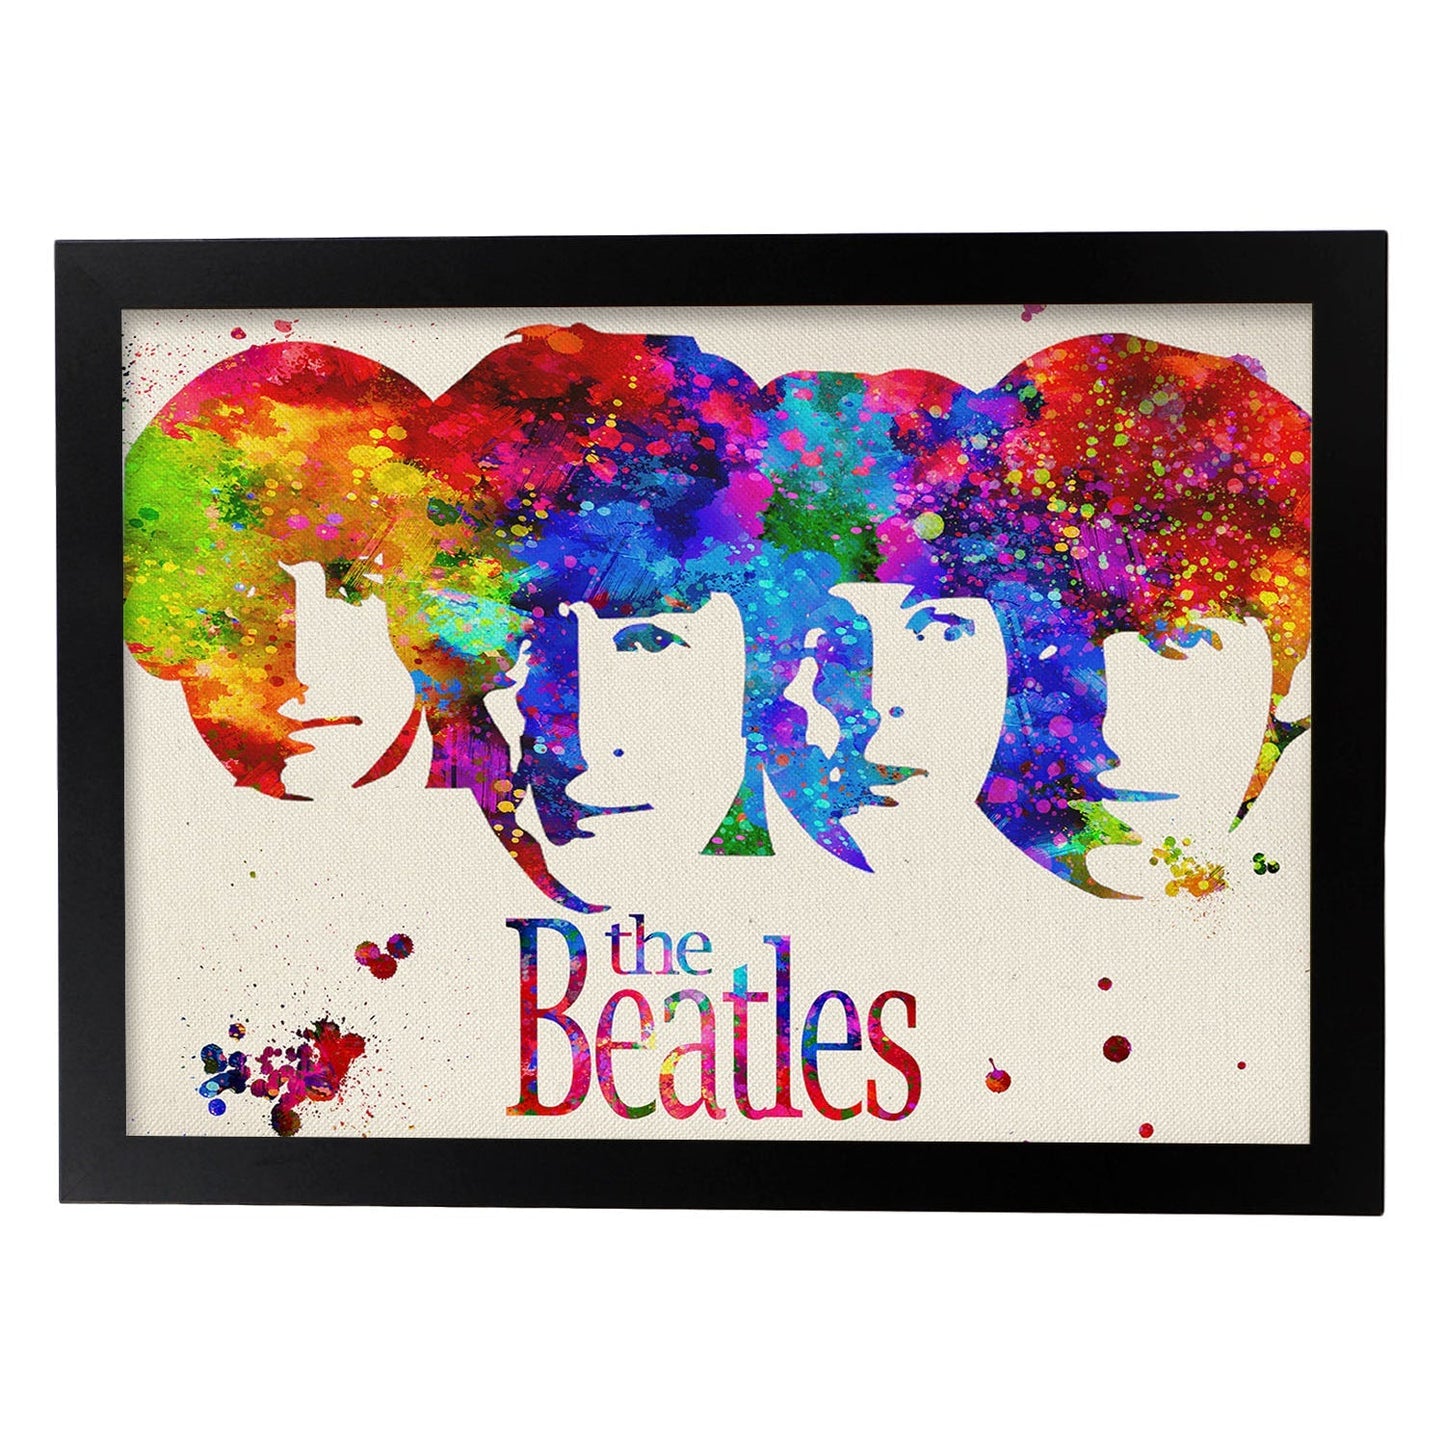 Lámina de la banda de música The Beatles (caras) en Poster estilo explosión de color . Papel 250 gr alta calidad.-Artwork-Nacnic-A3-Marco Negro-Nacnic Estudio SL